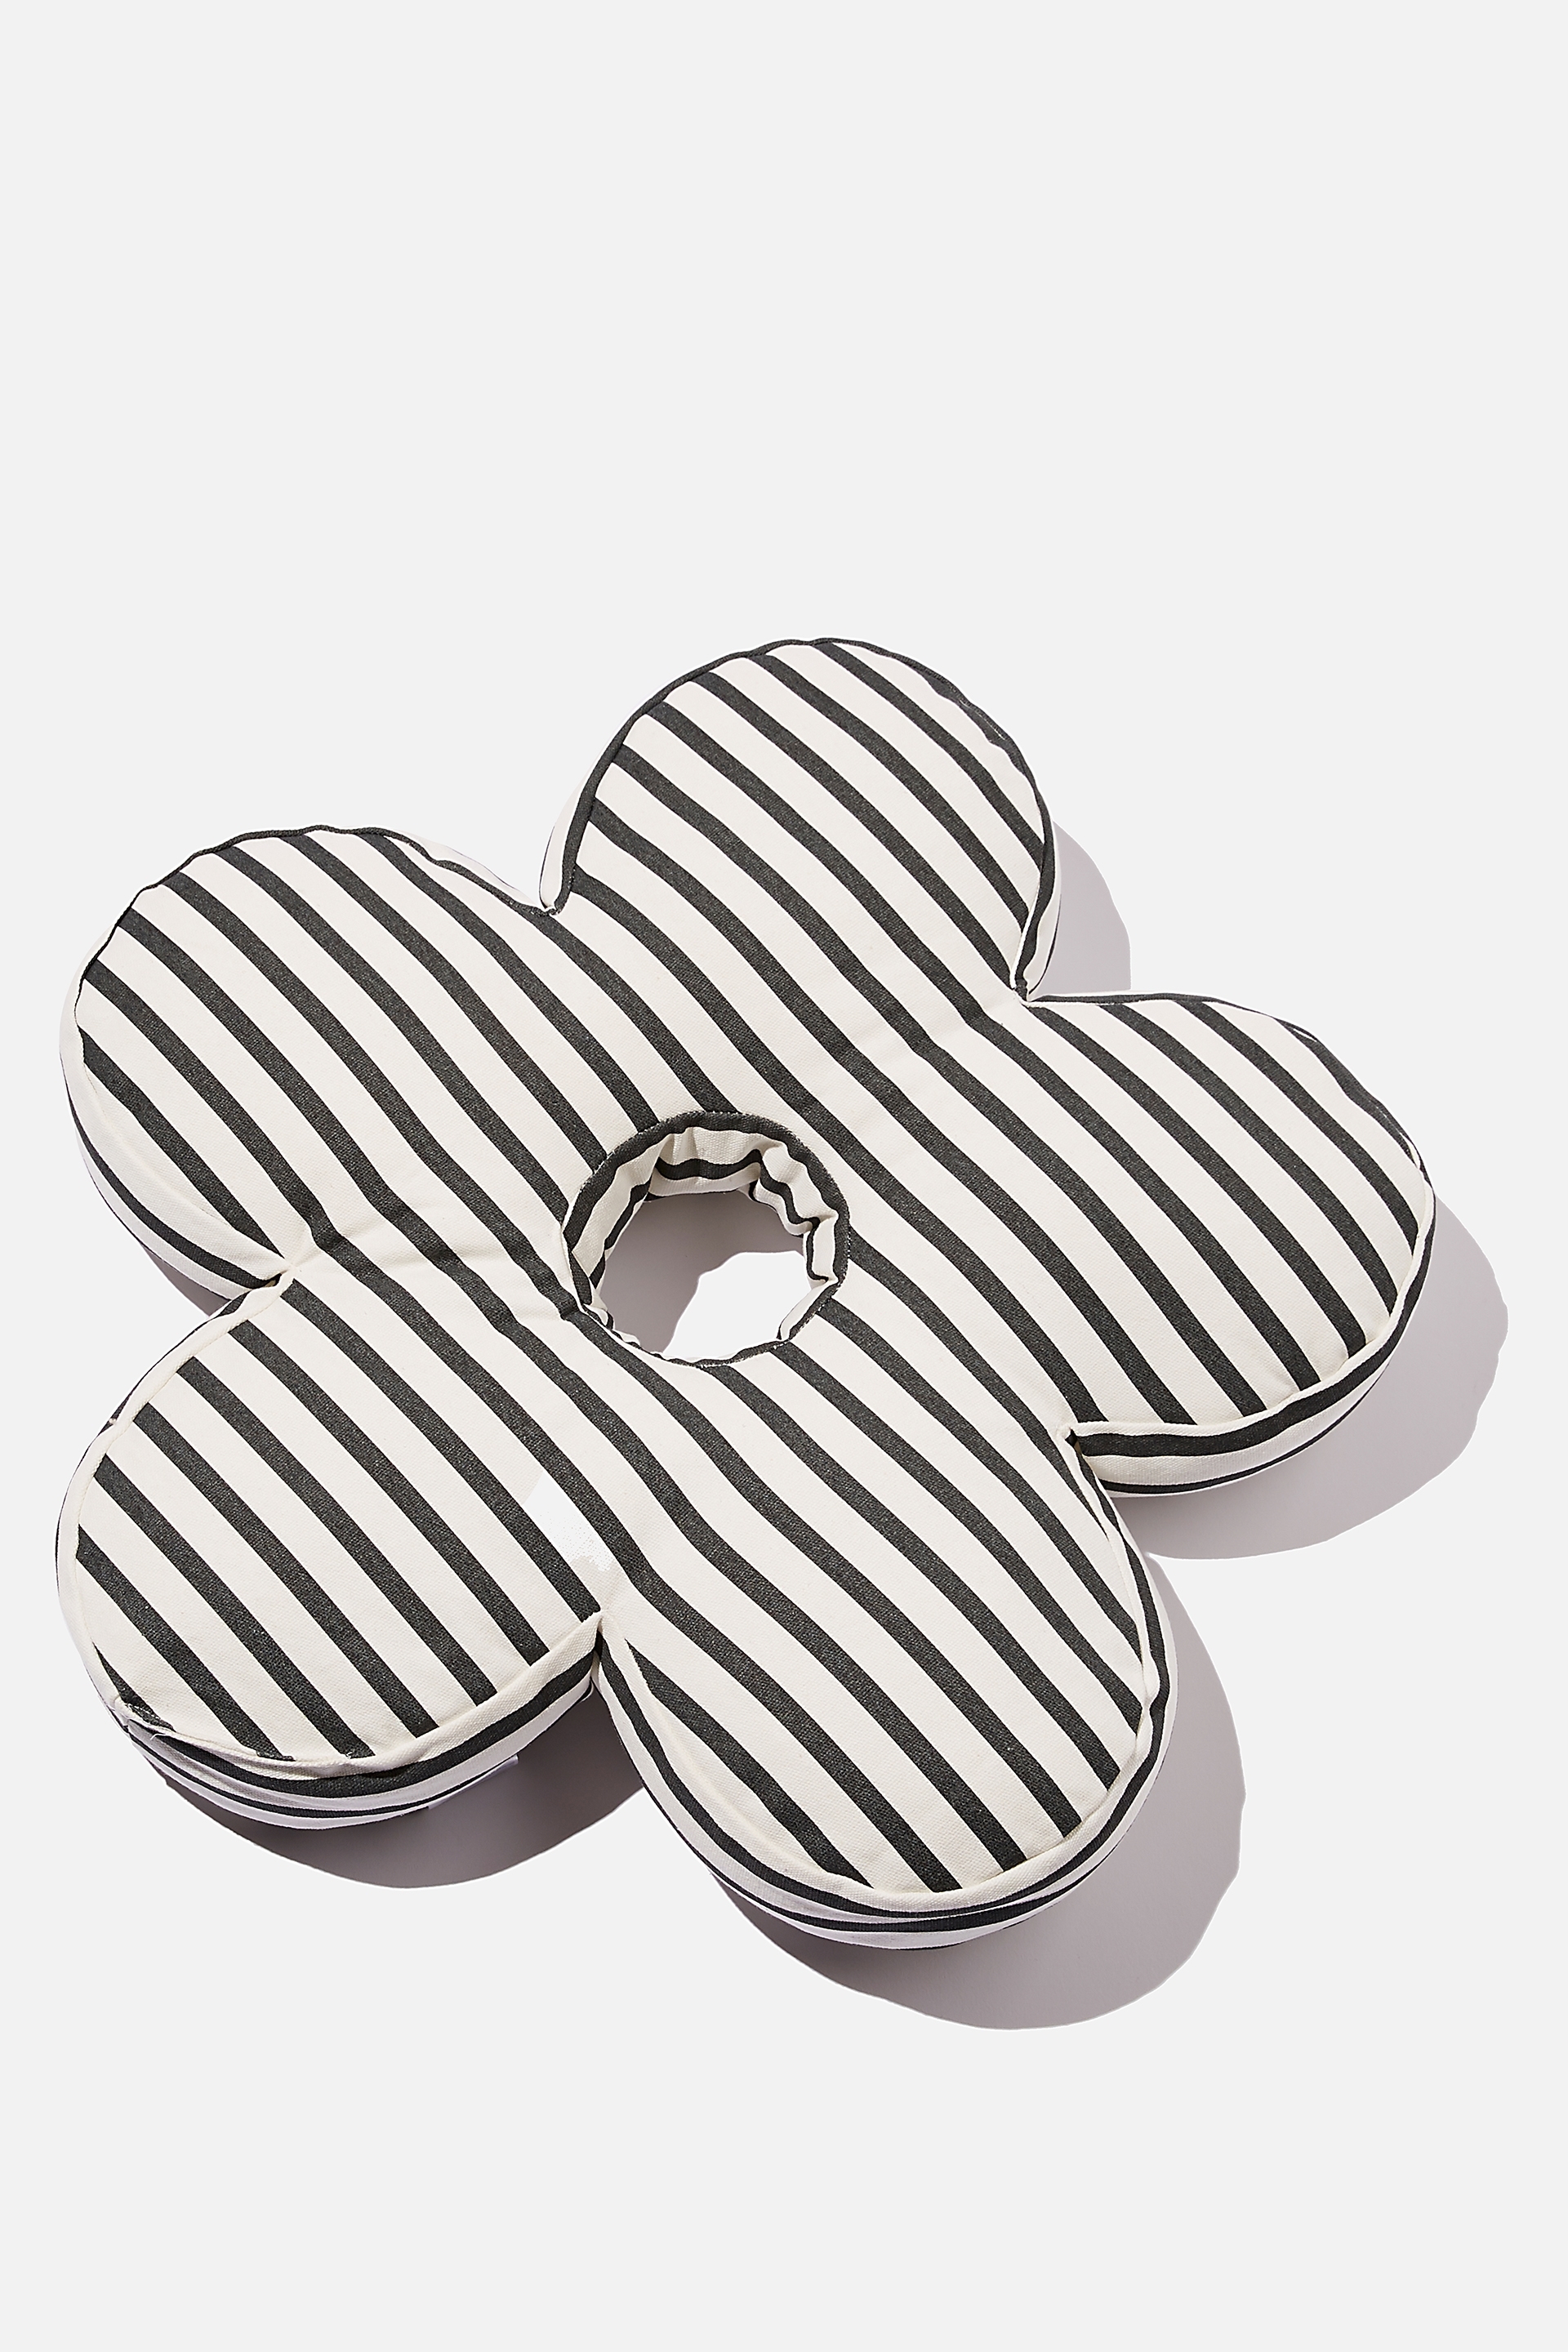 Typo - Canvas Cushy Cushion - Daisy black white parker stripe